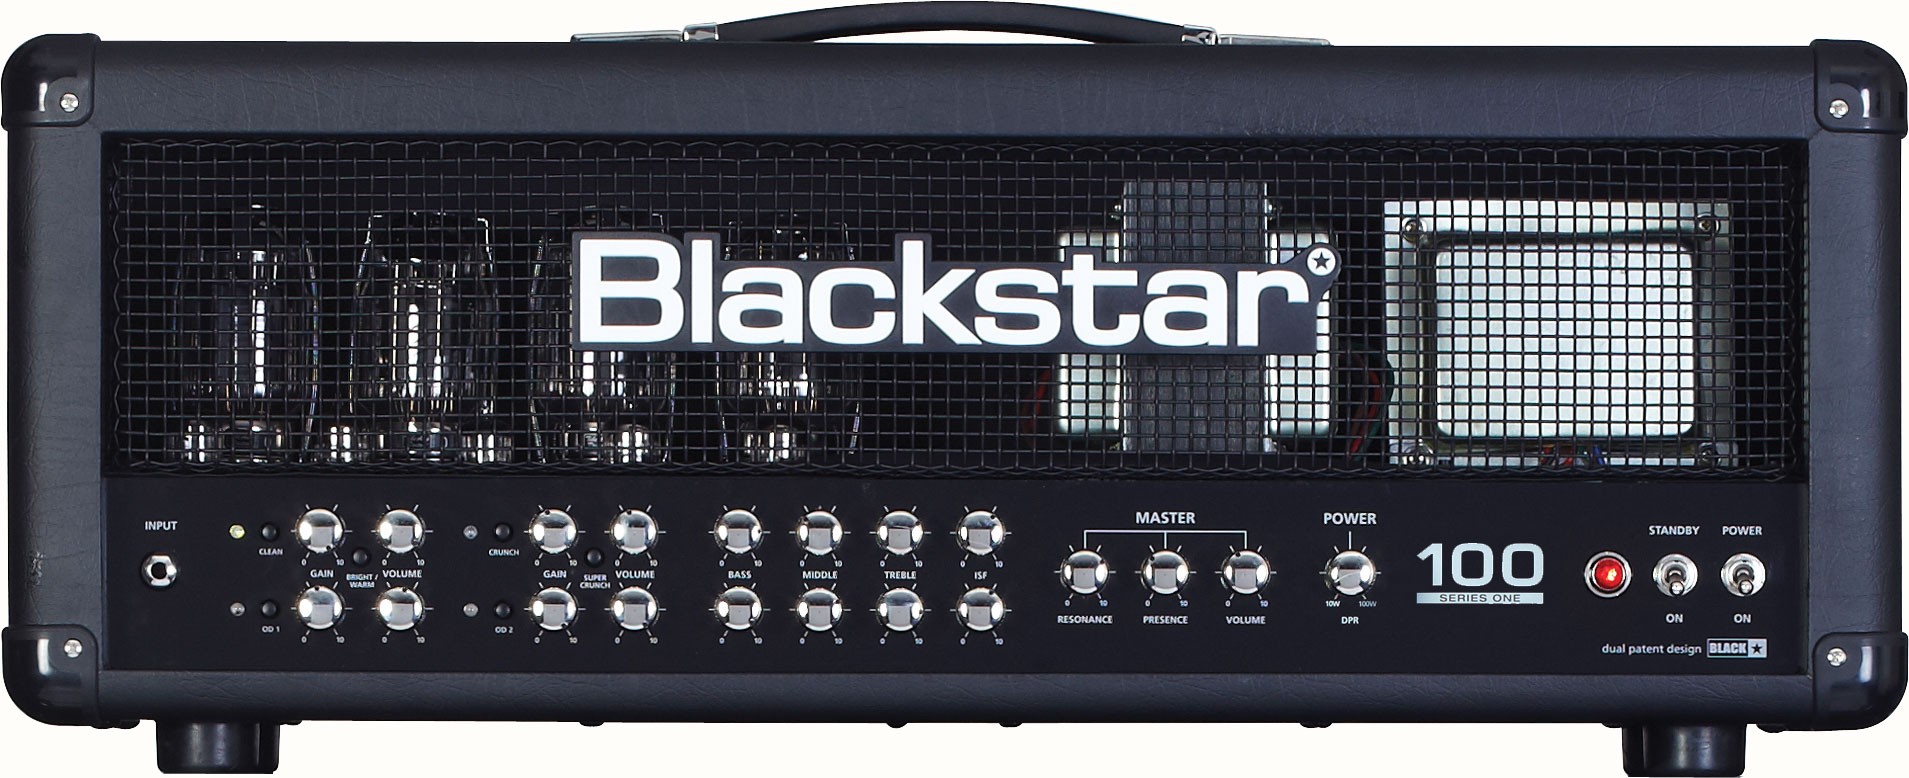 BLACKSTAR S1-104EL34